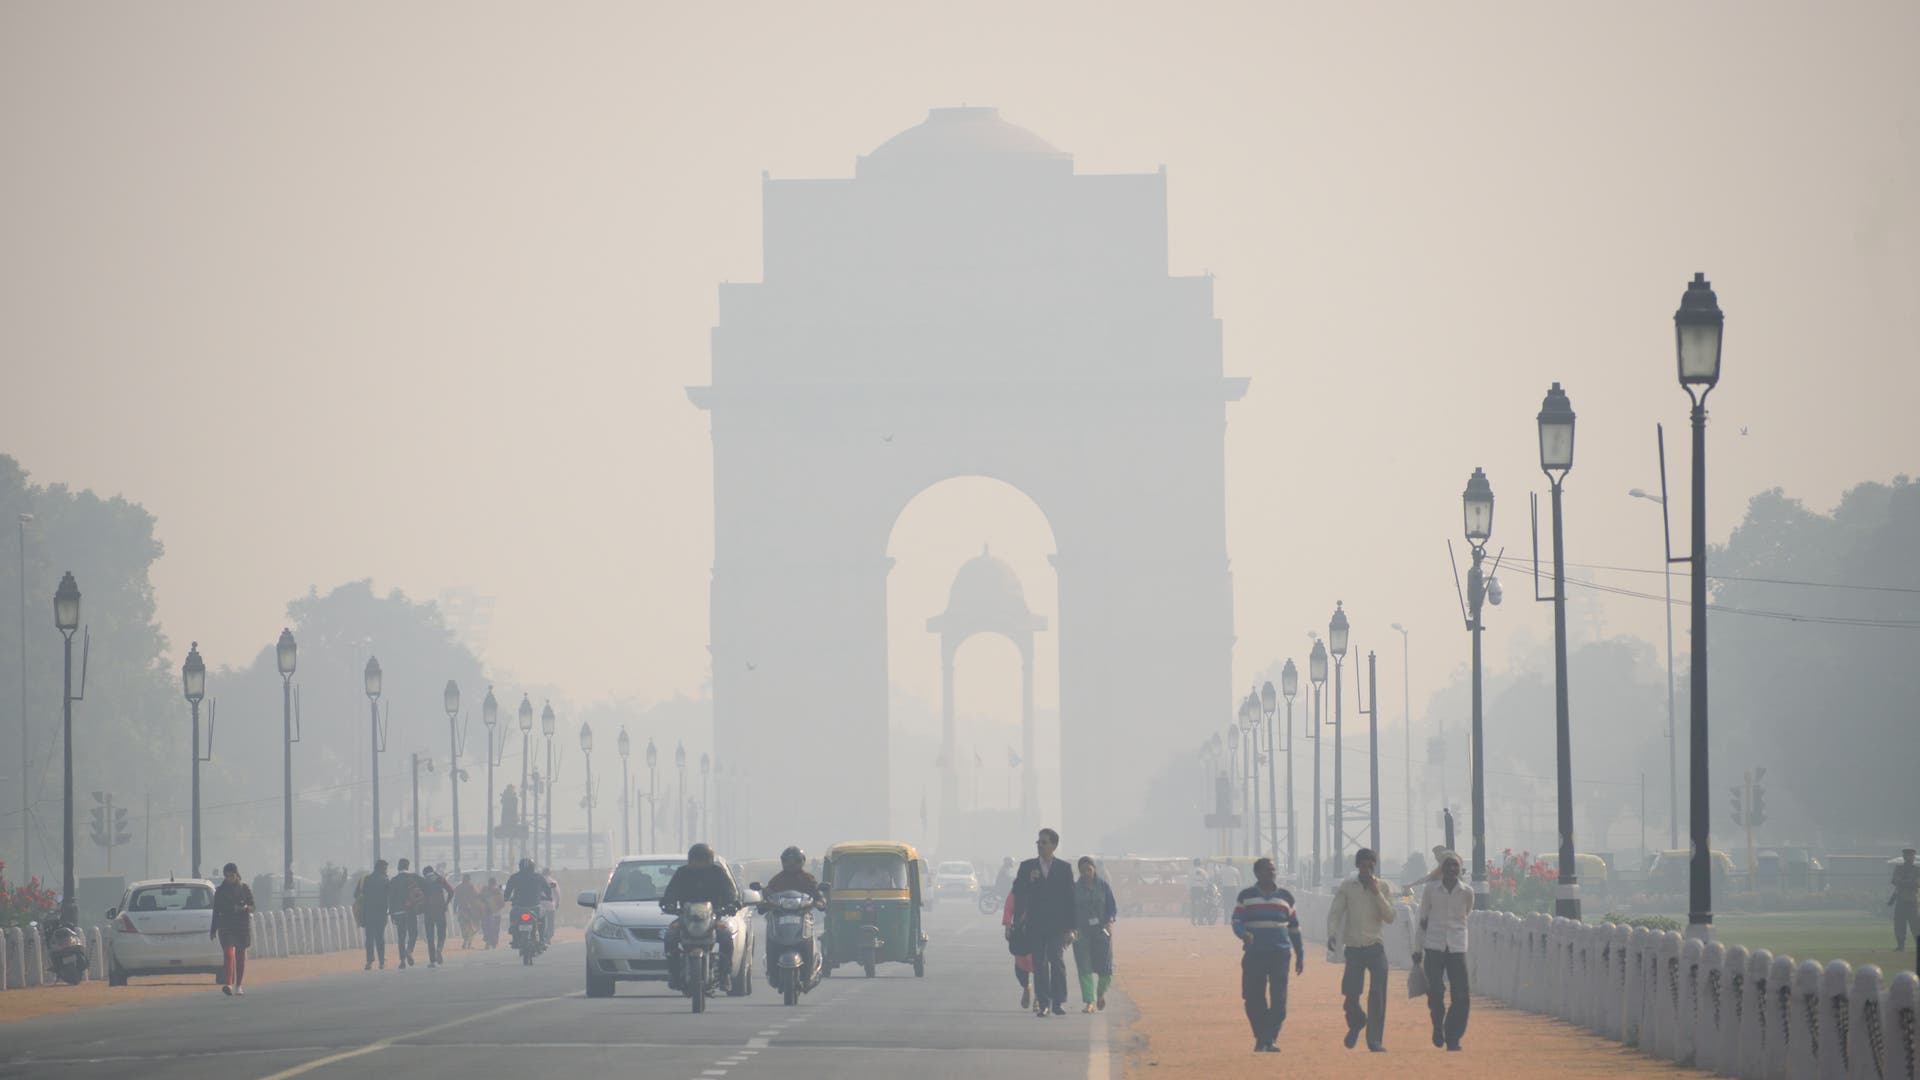 Wood fires make heavy smog in New Delhi